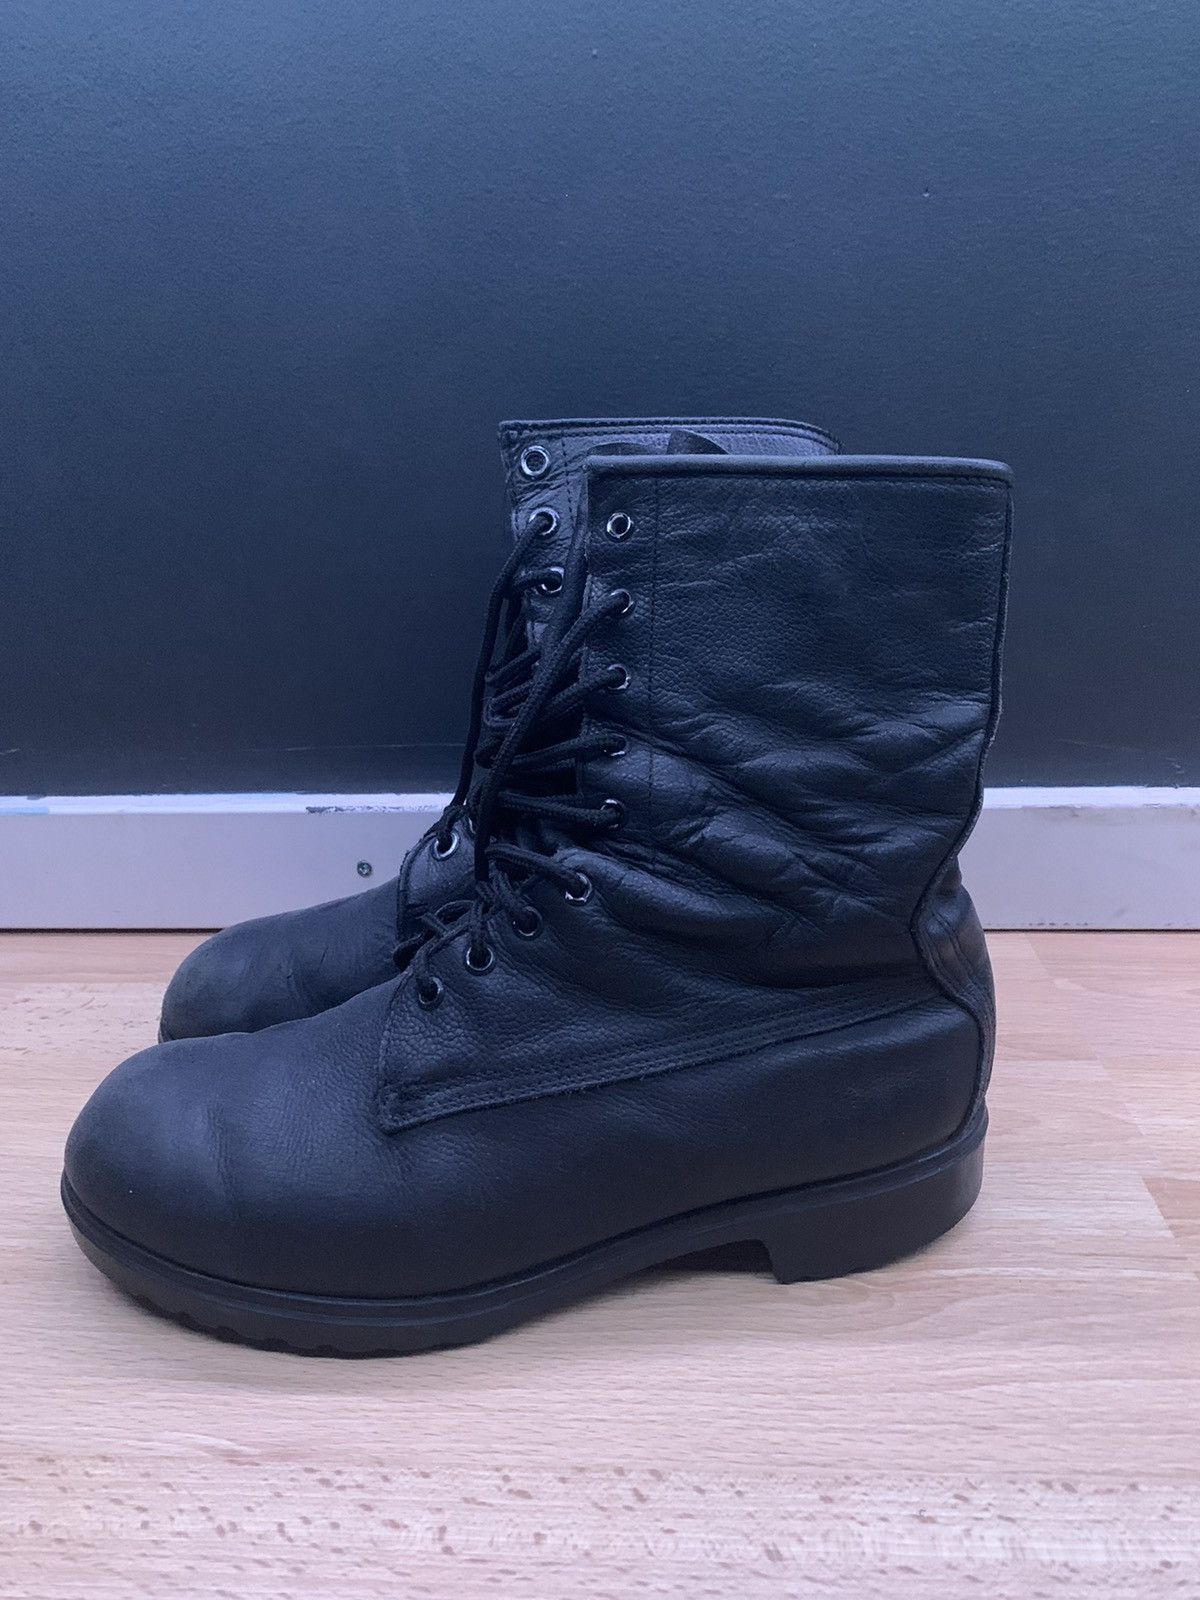 Vintage Vintage Leather Military Boots Size US 9 / EU 42 - 2 Preview